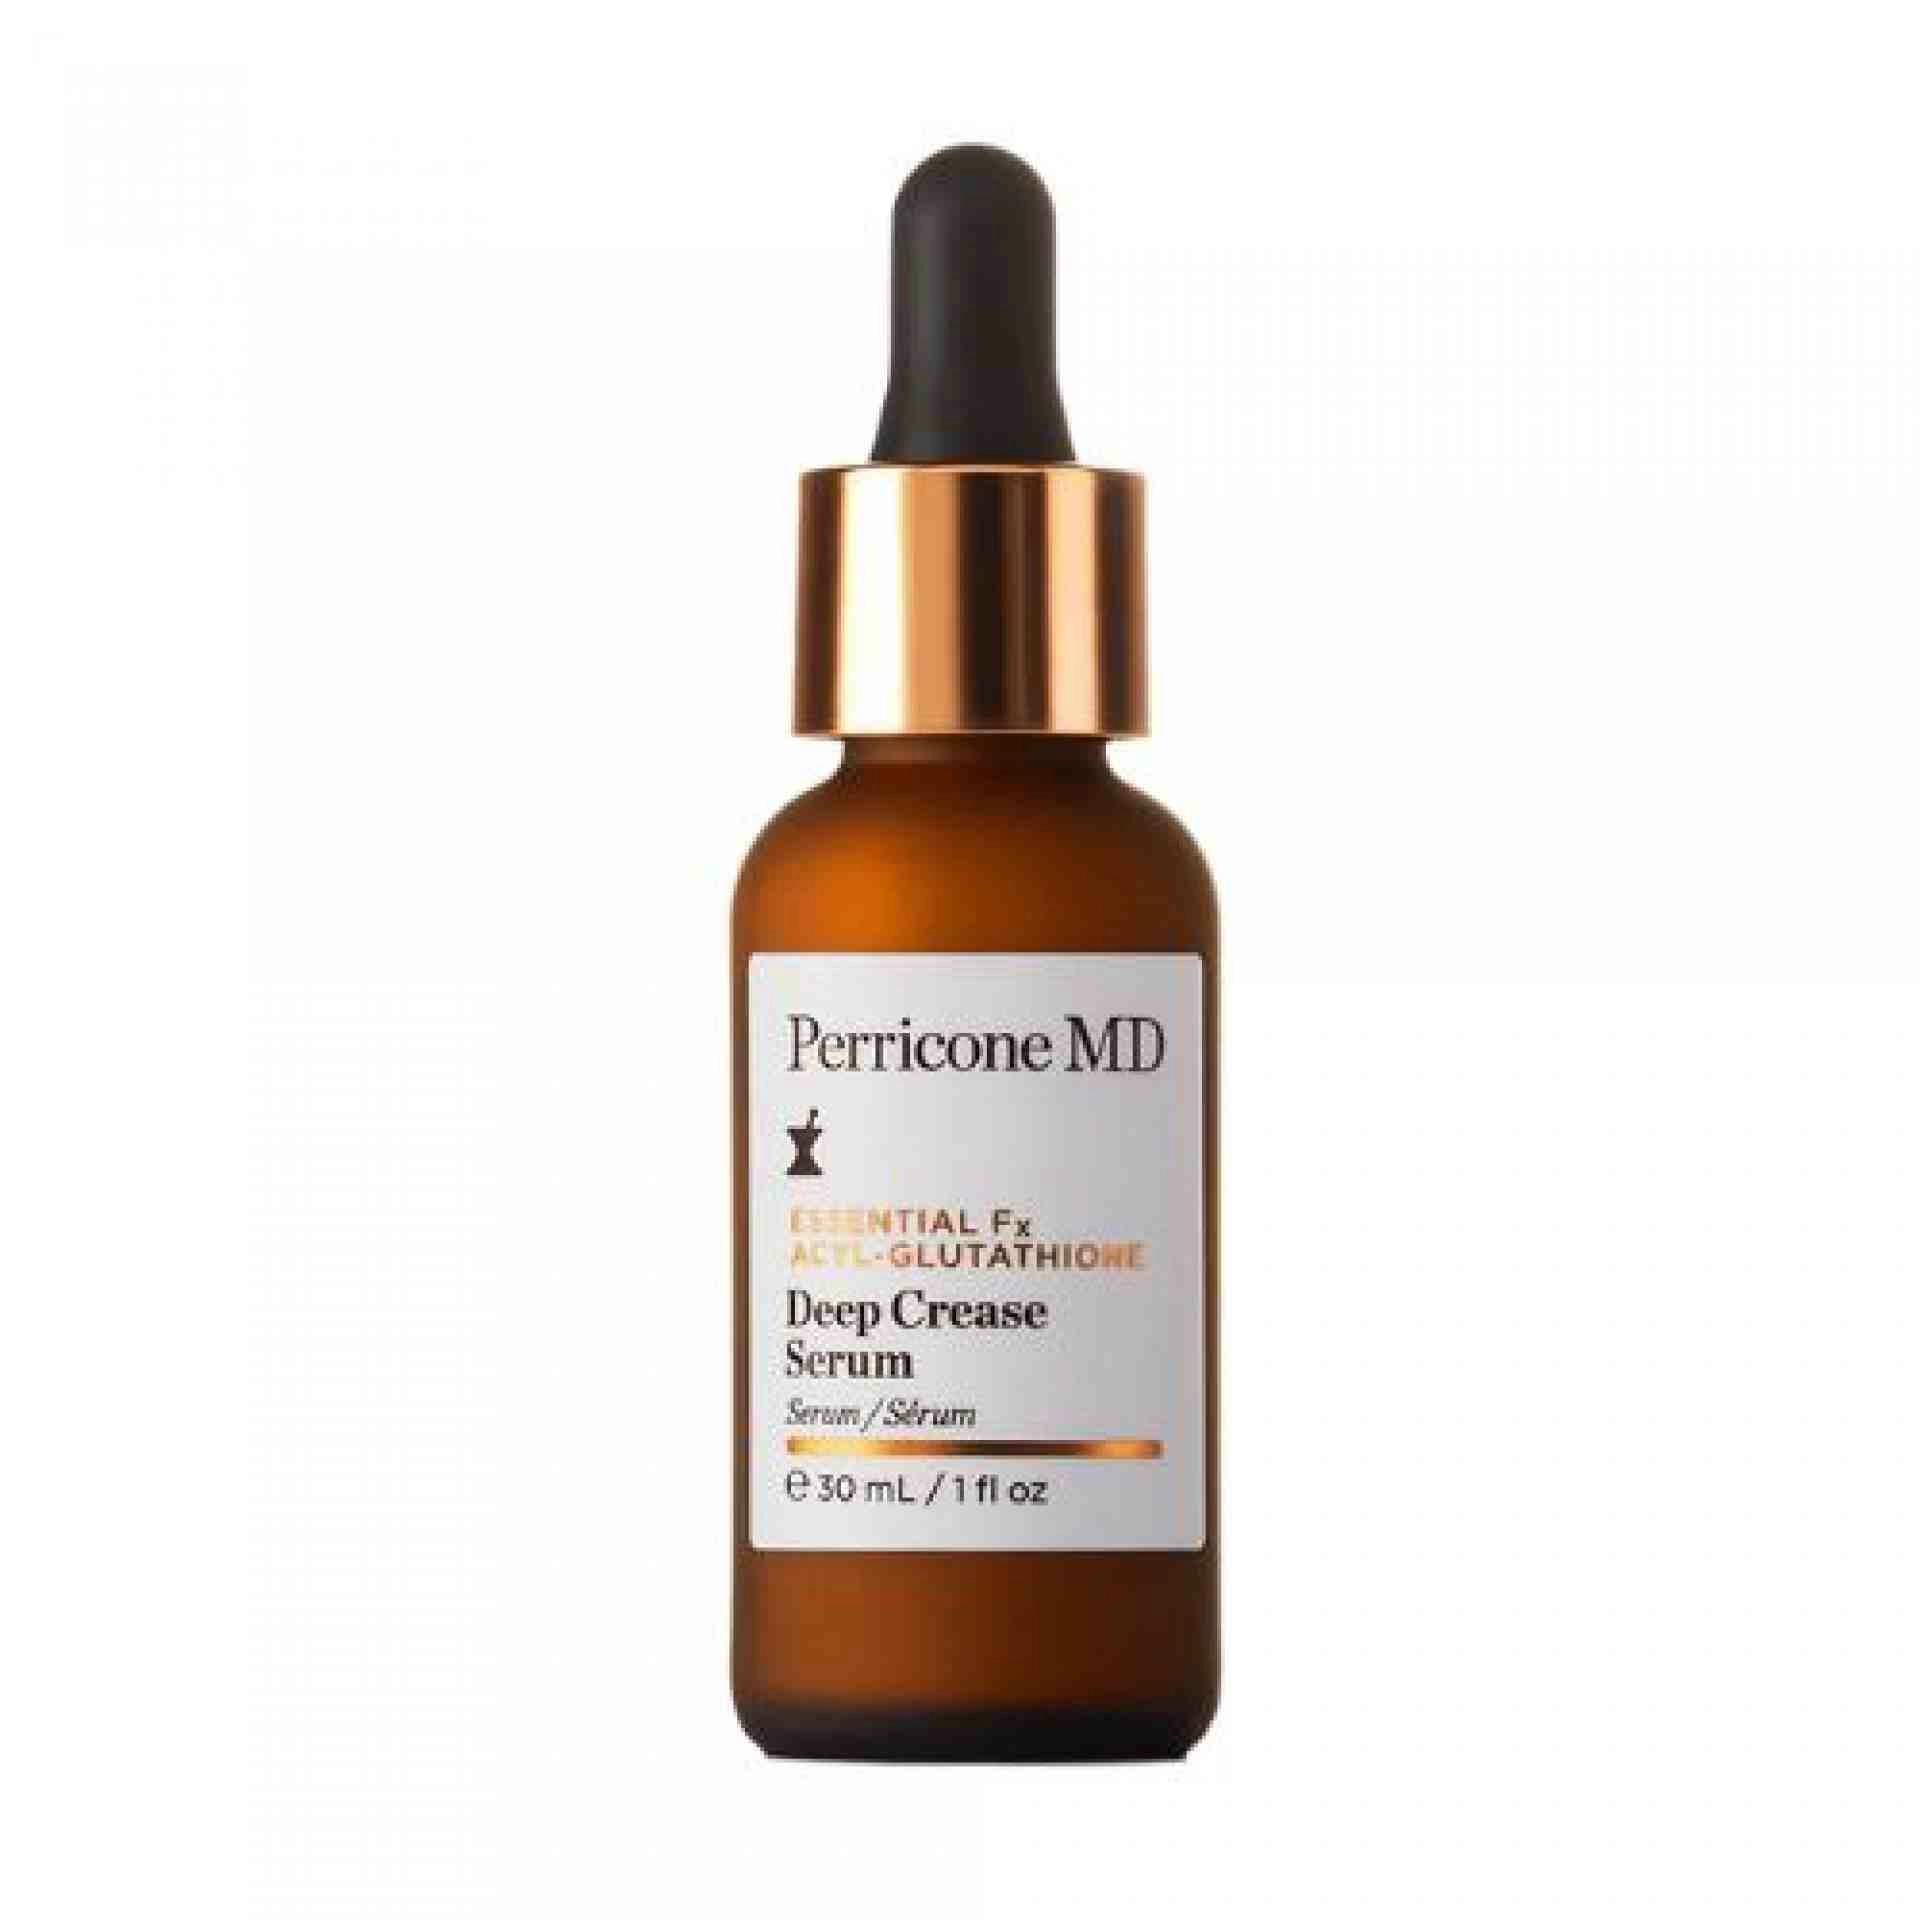 Essential fx deep crease serum | Serum antiarrugas 30ml  - Essential fx collection - Perricone MD®